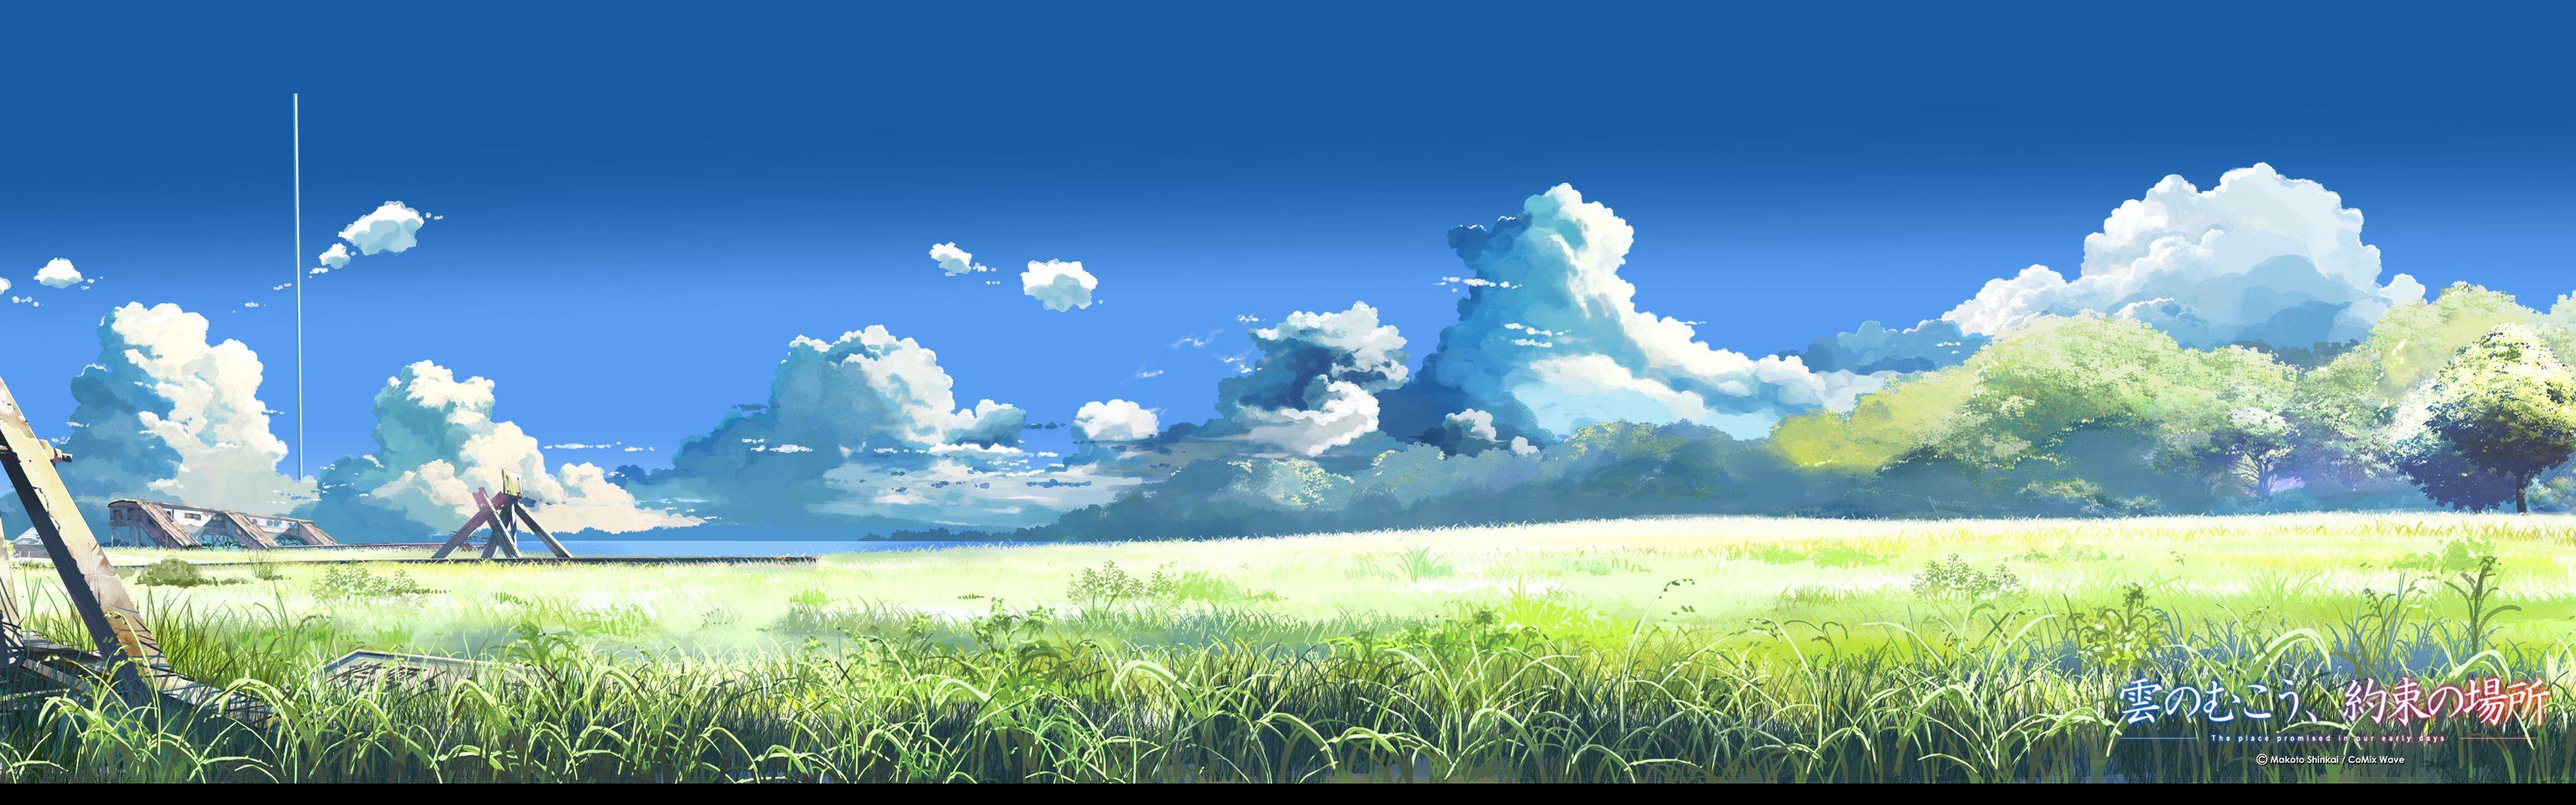 3360x1050 Anime Grass Scenery hình nền